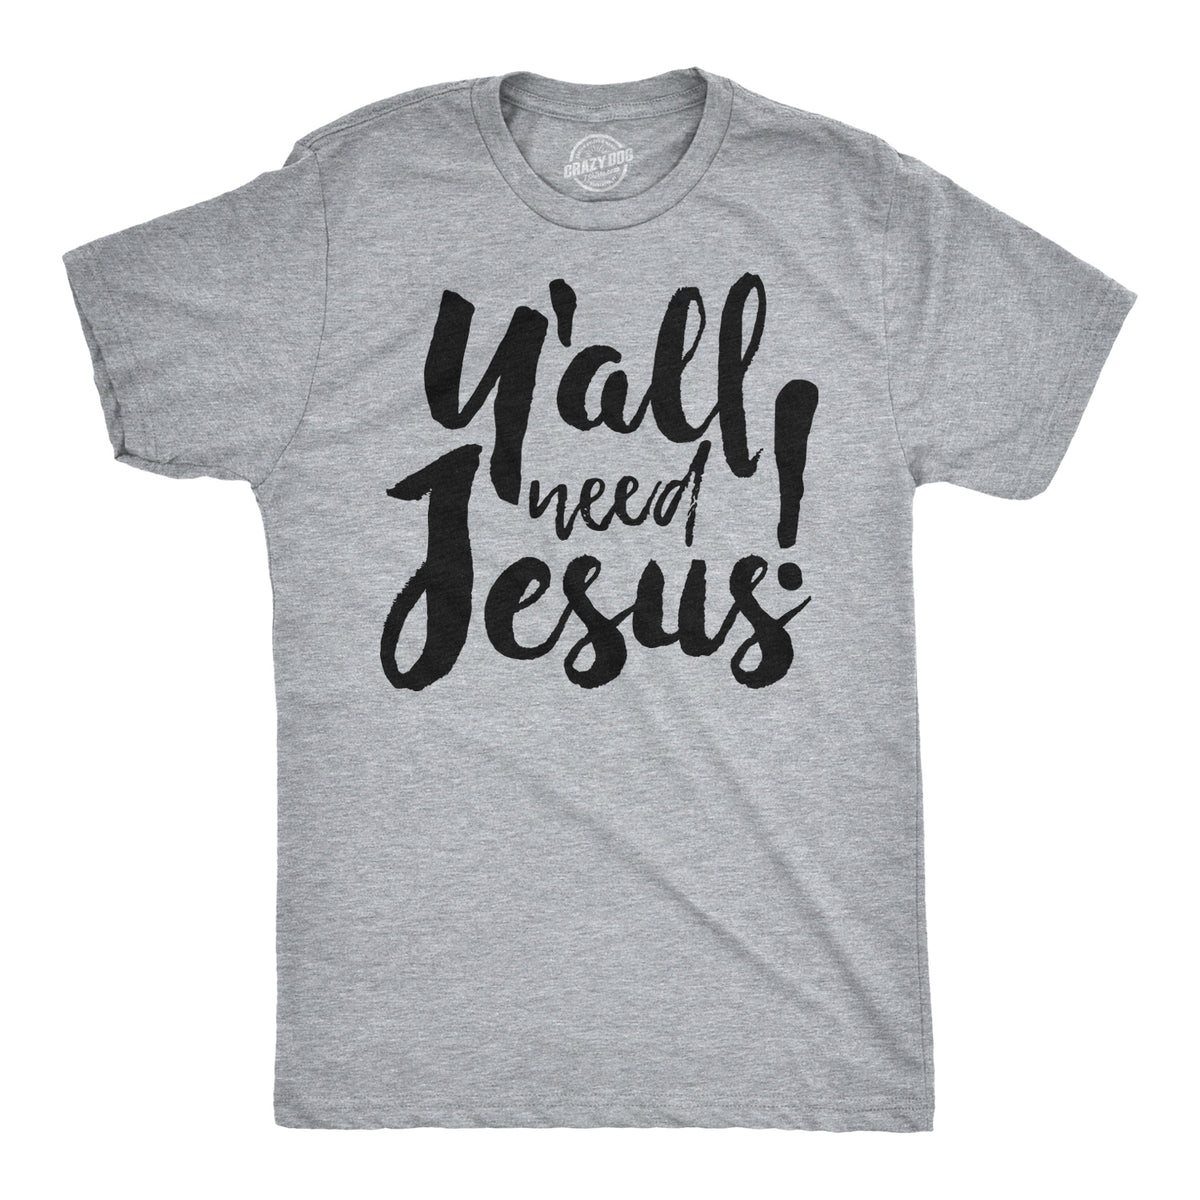 Funny Light Heather Grey - Yall Need Ya’ll Need Jesus Mens T Shirt Nerdy Easter Religion Tee